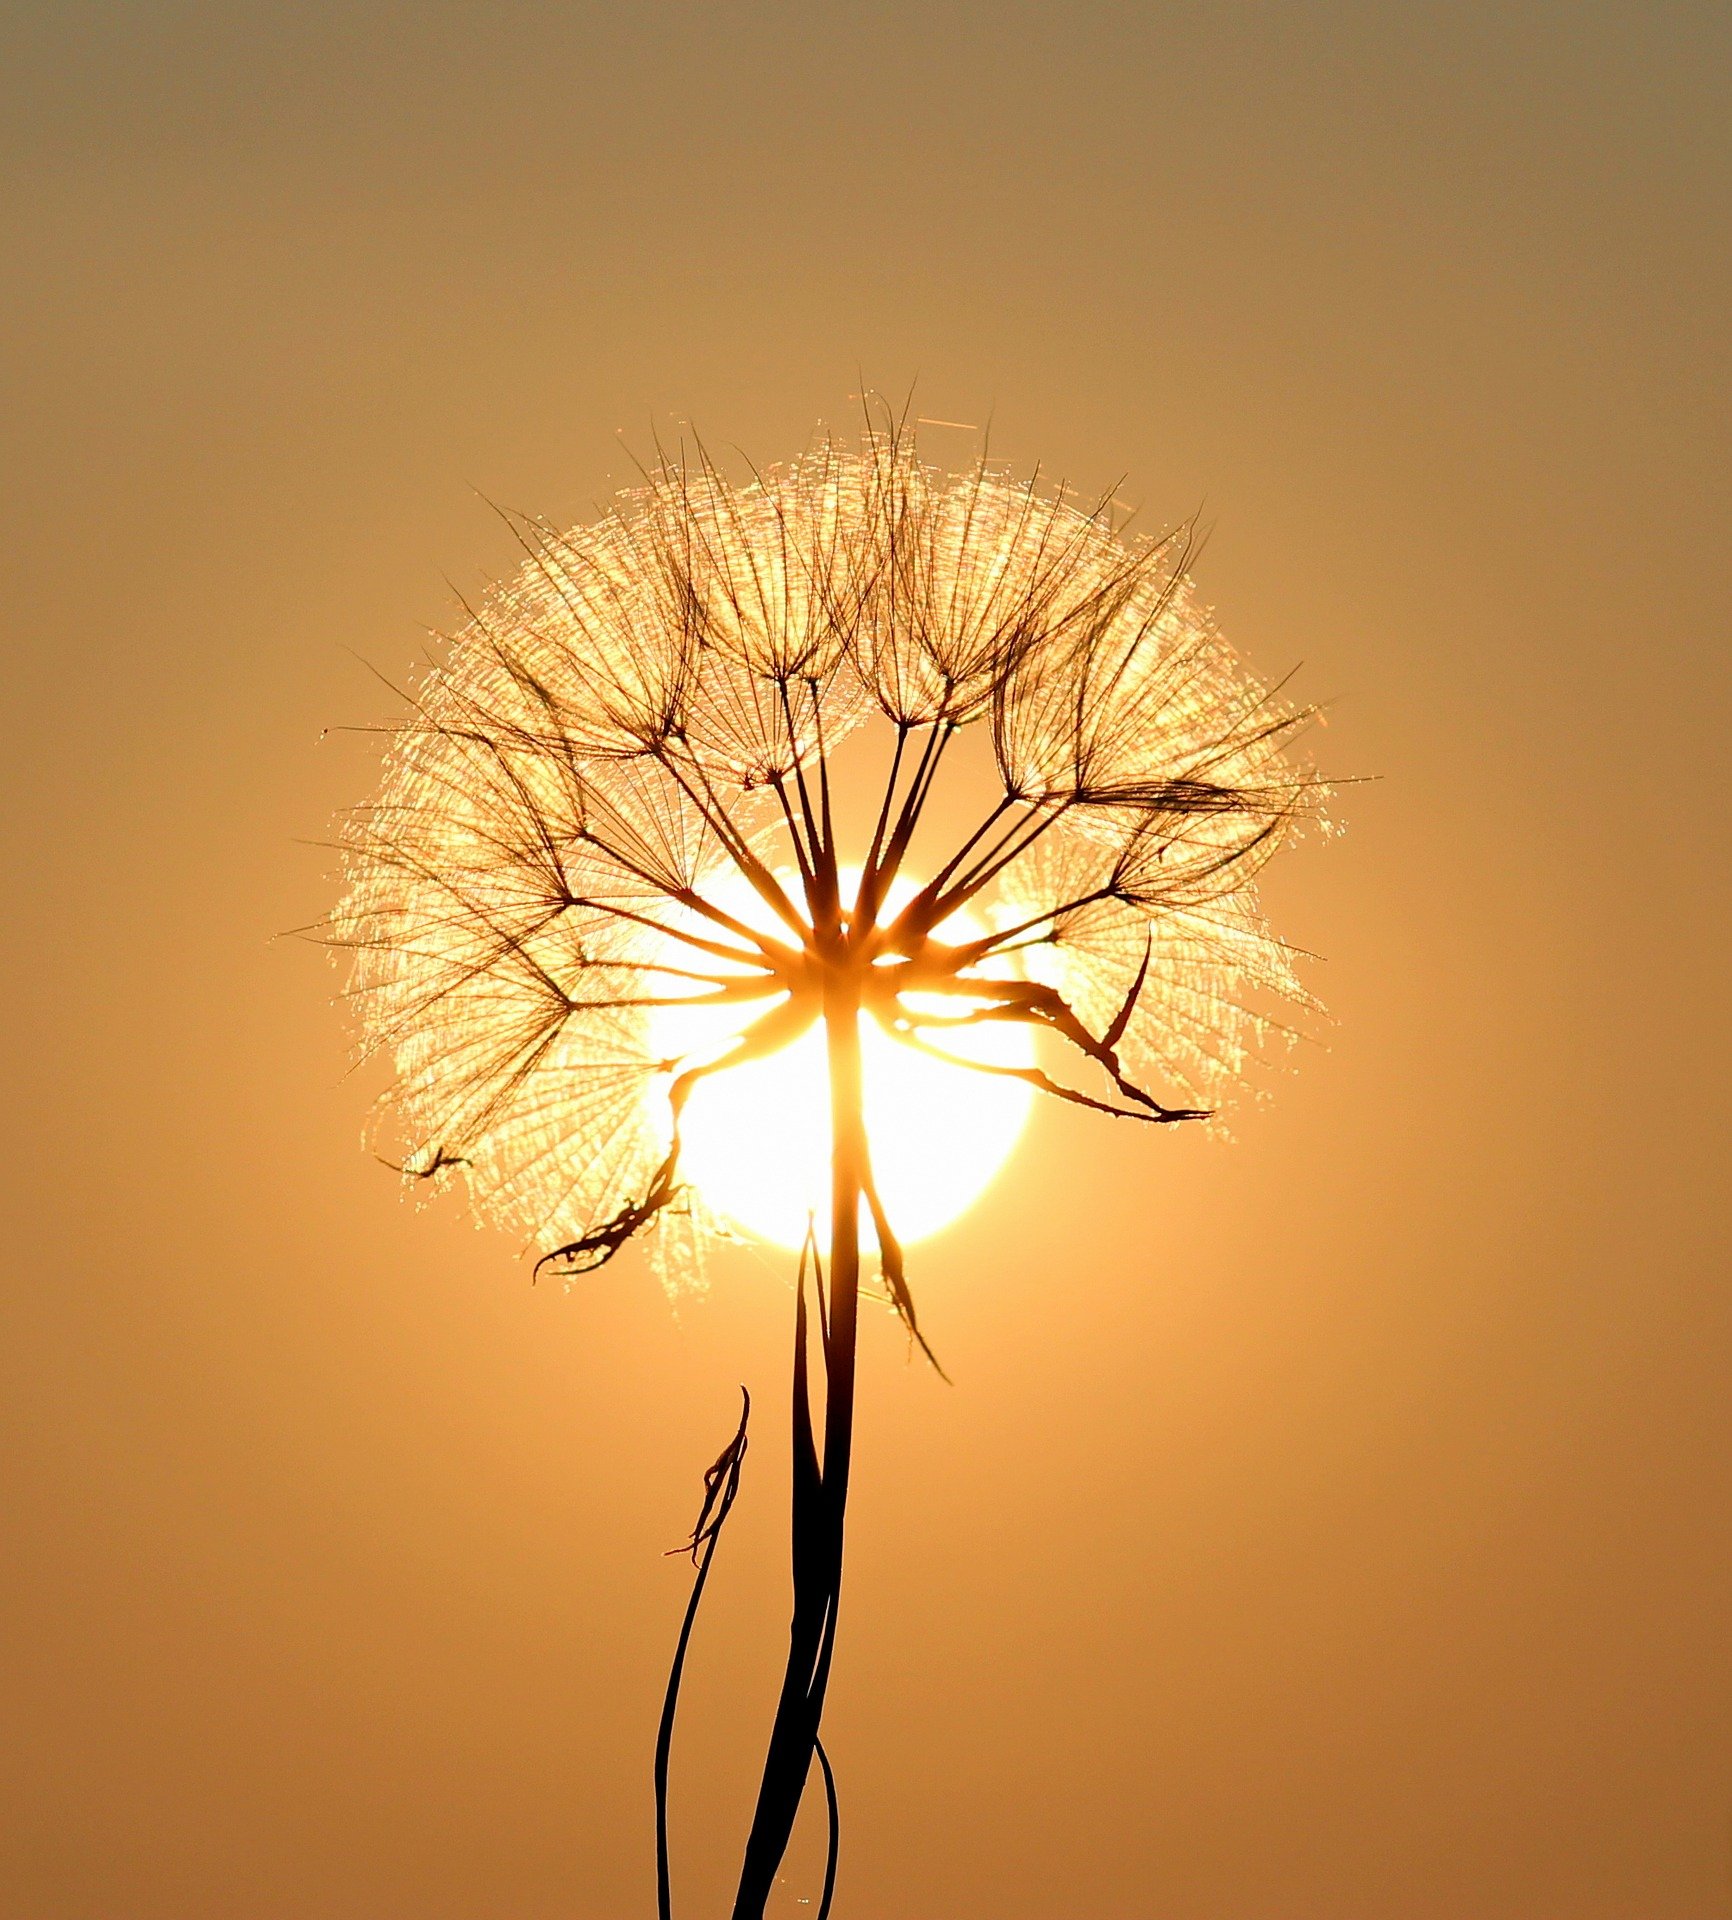 Dandelion framed with setting sun